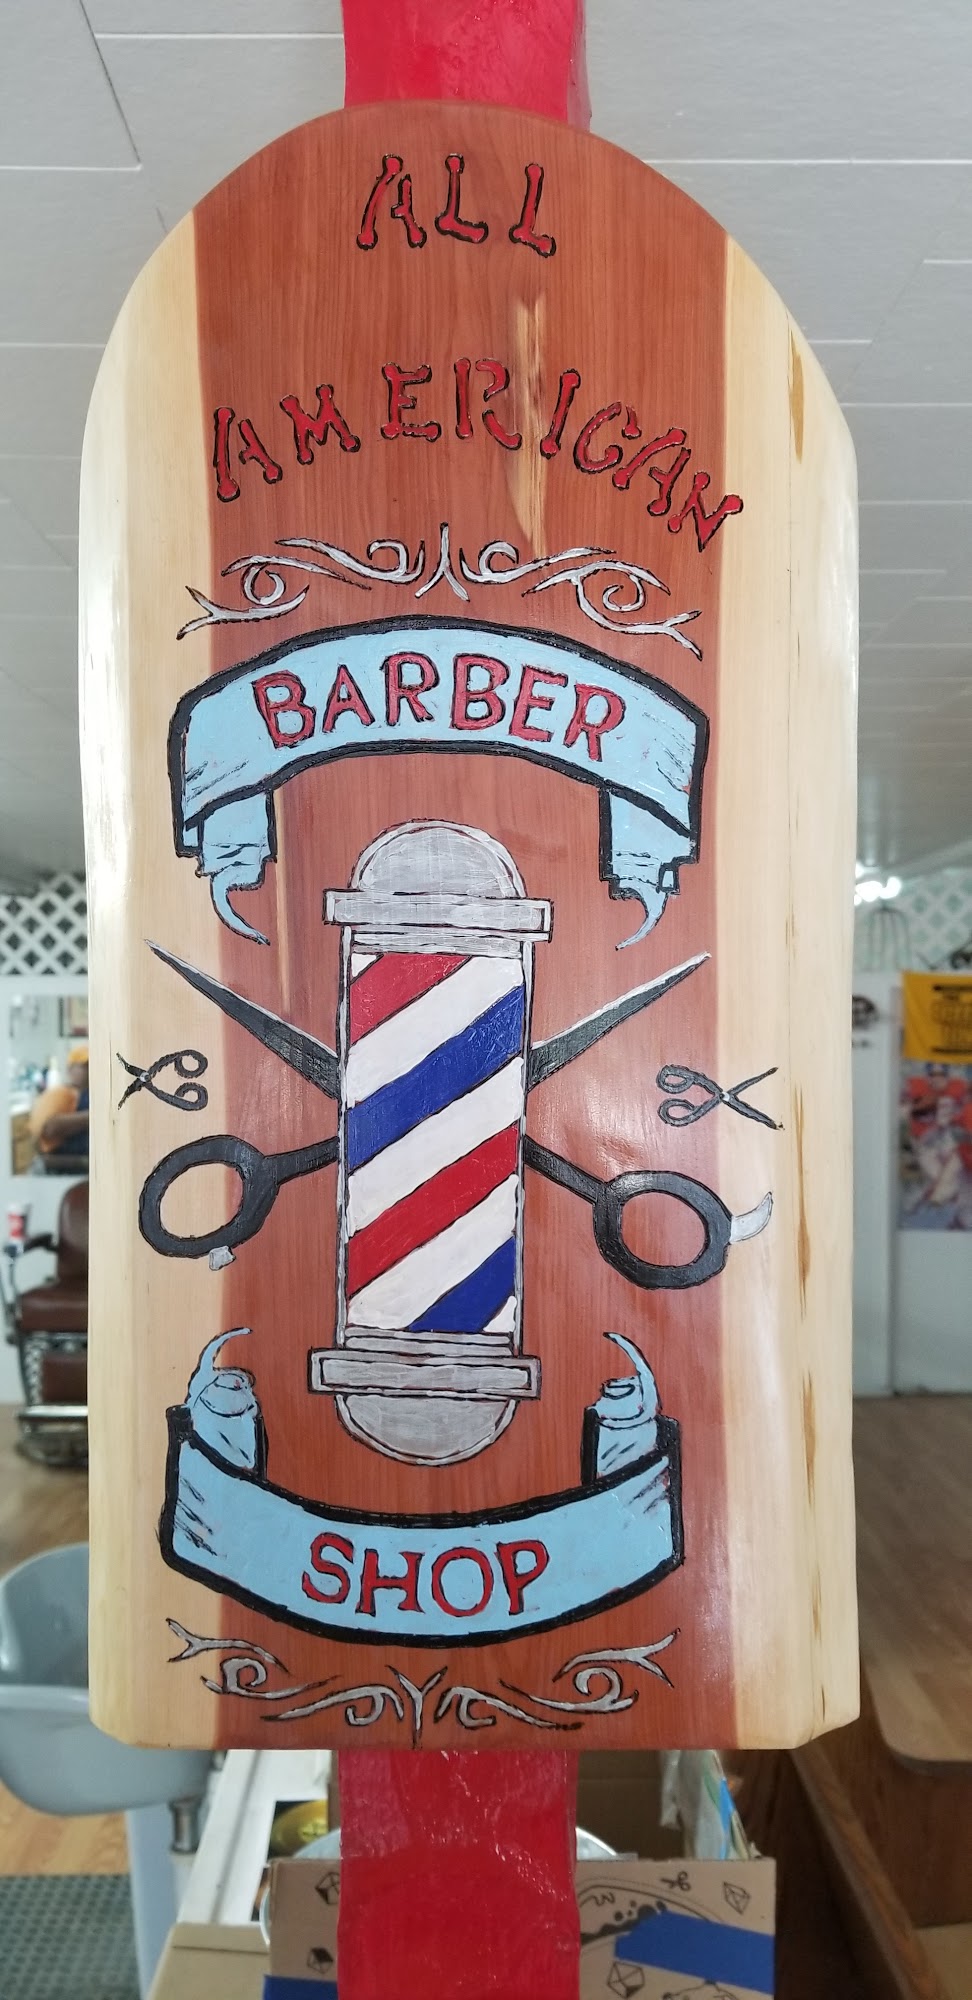 All American barbershop